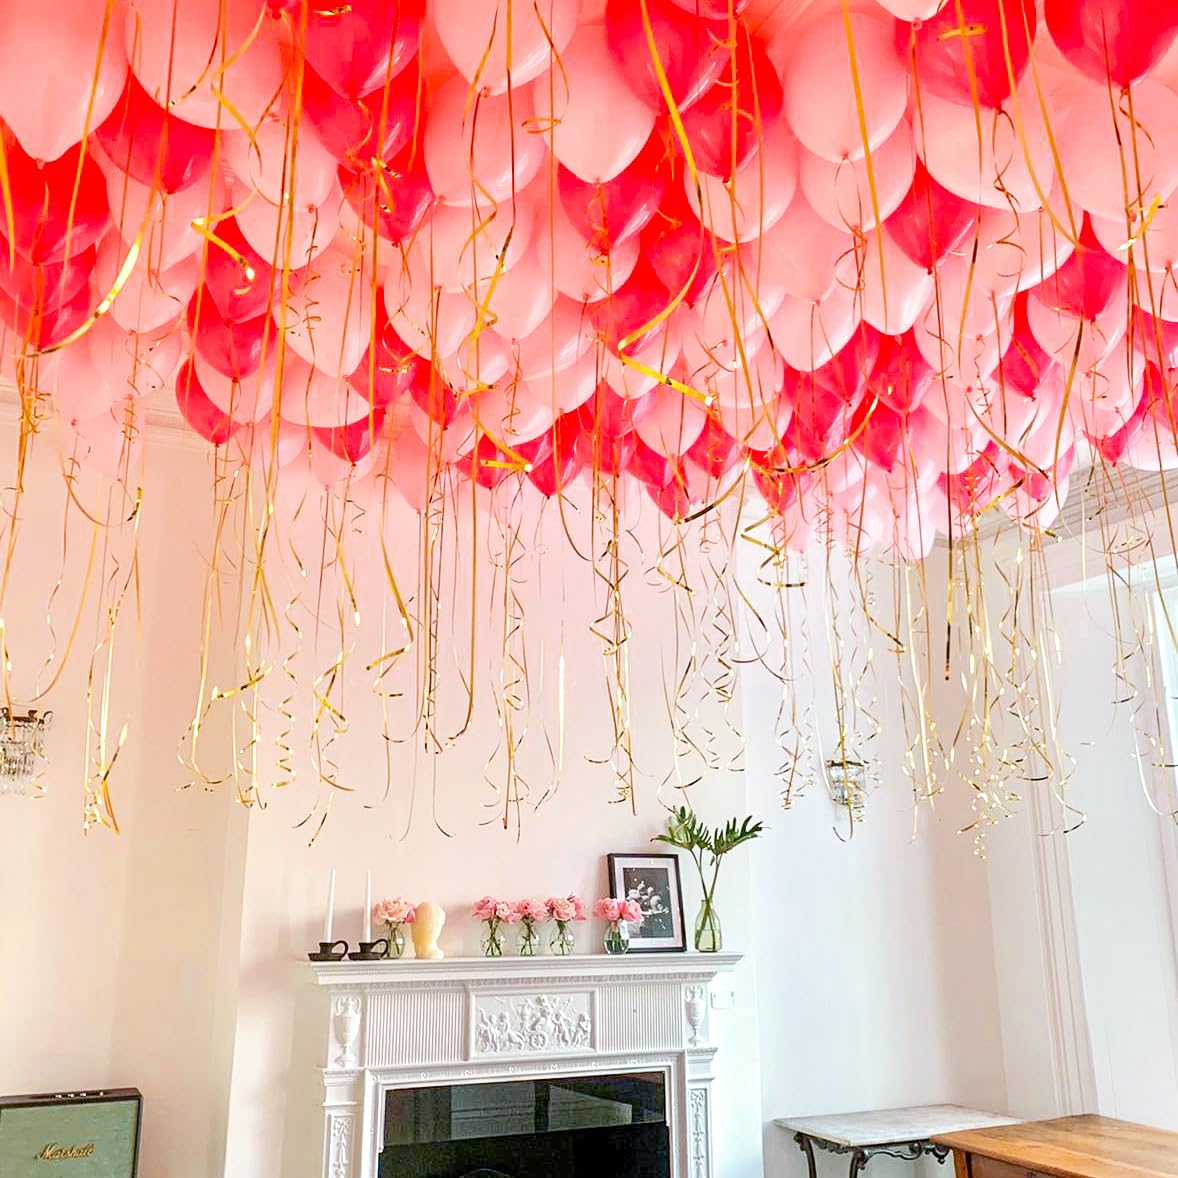 Lavish red & pink theme balloon decor